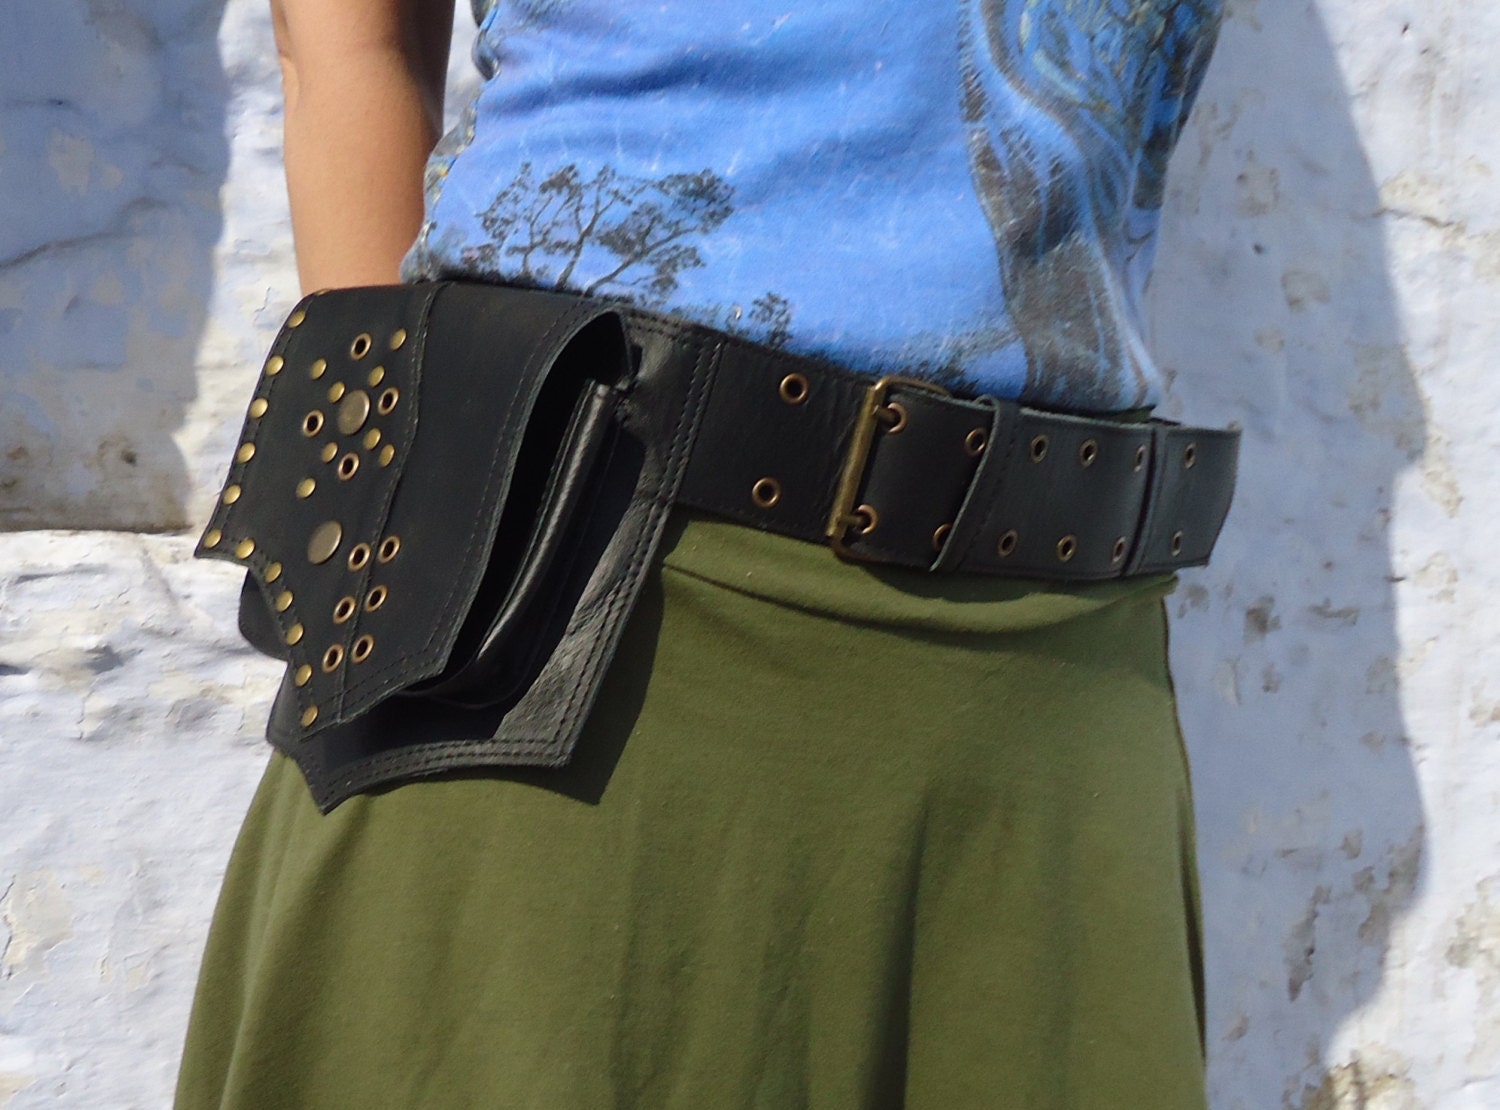 Leather Utility Belt Steampunk Leather Hip Belt Bag With Pockets in Black Festival Belt-HB1D FREE SHIPPING